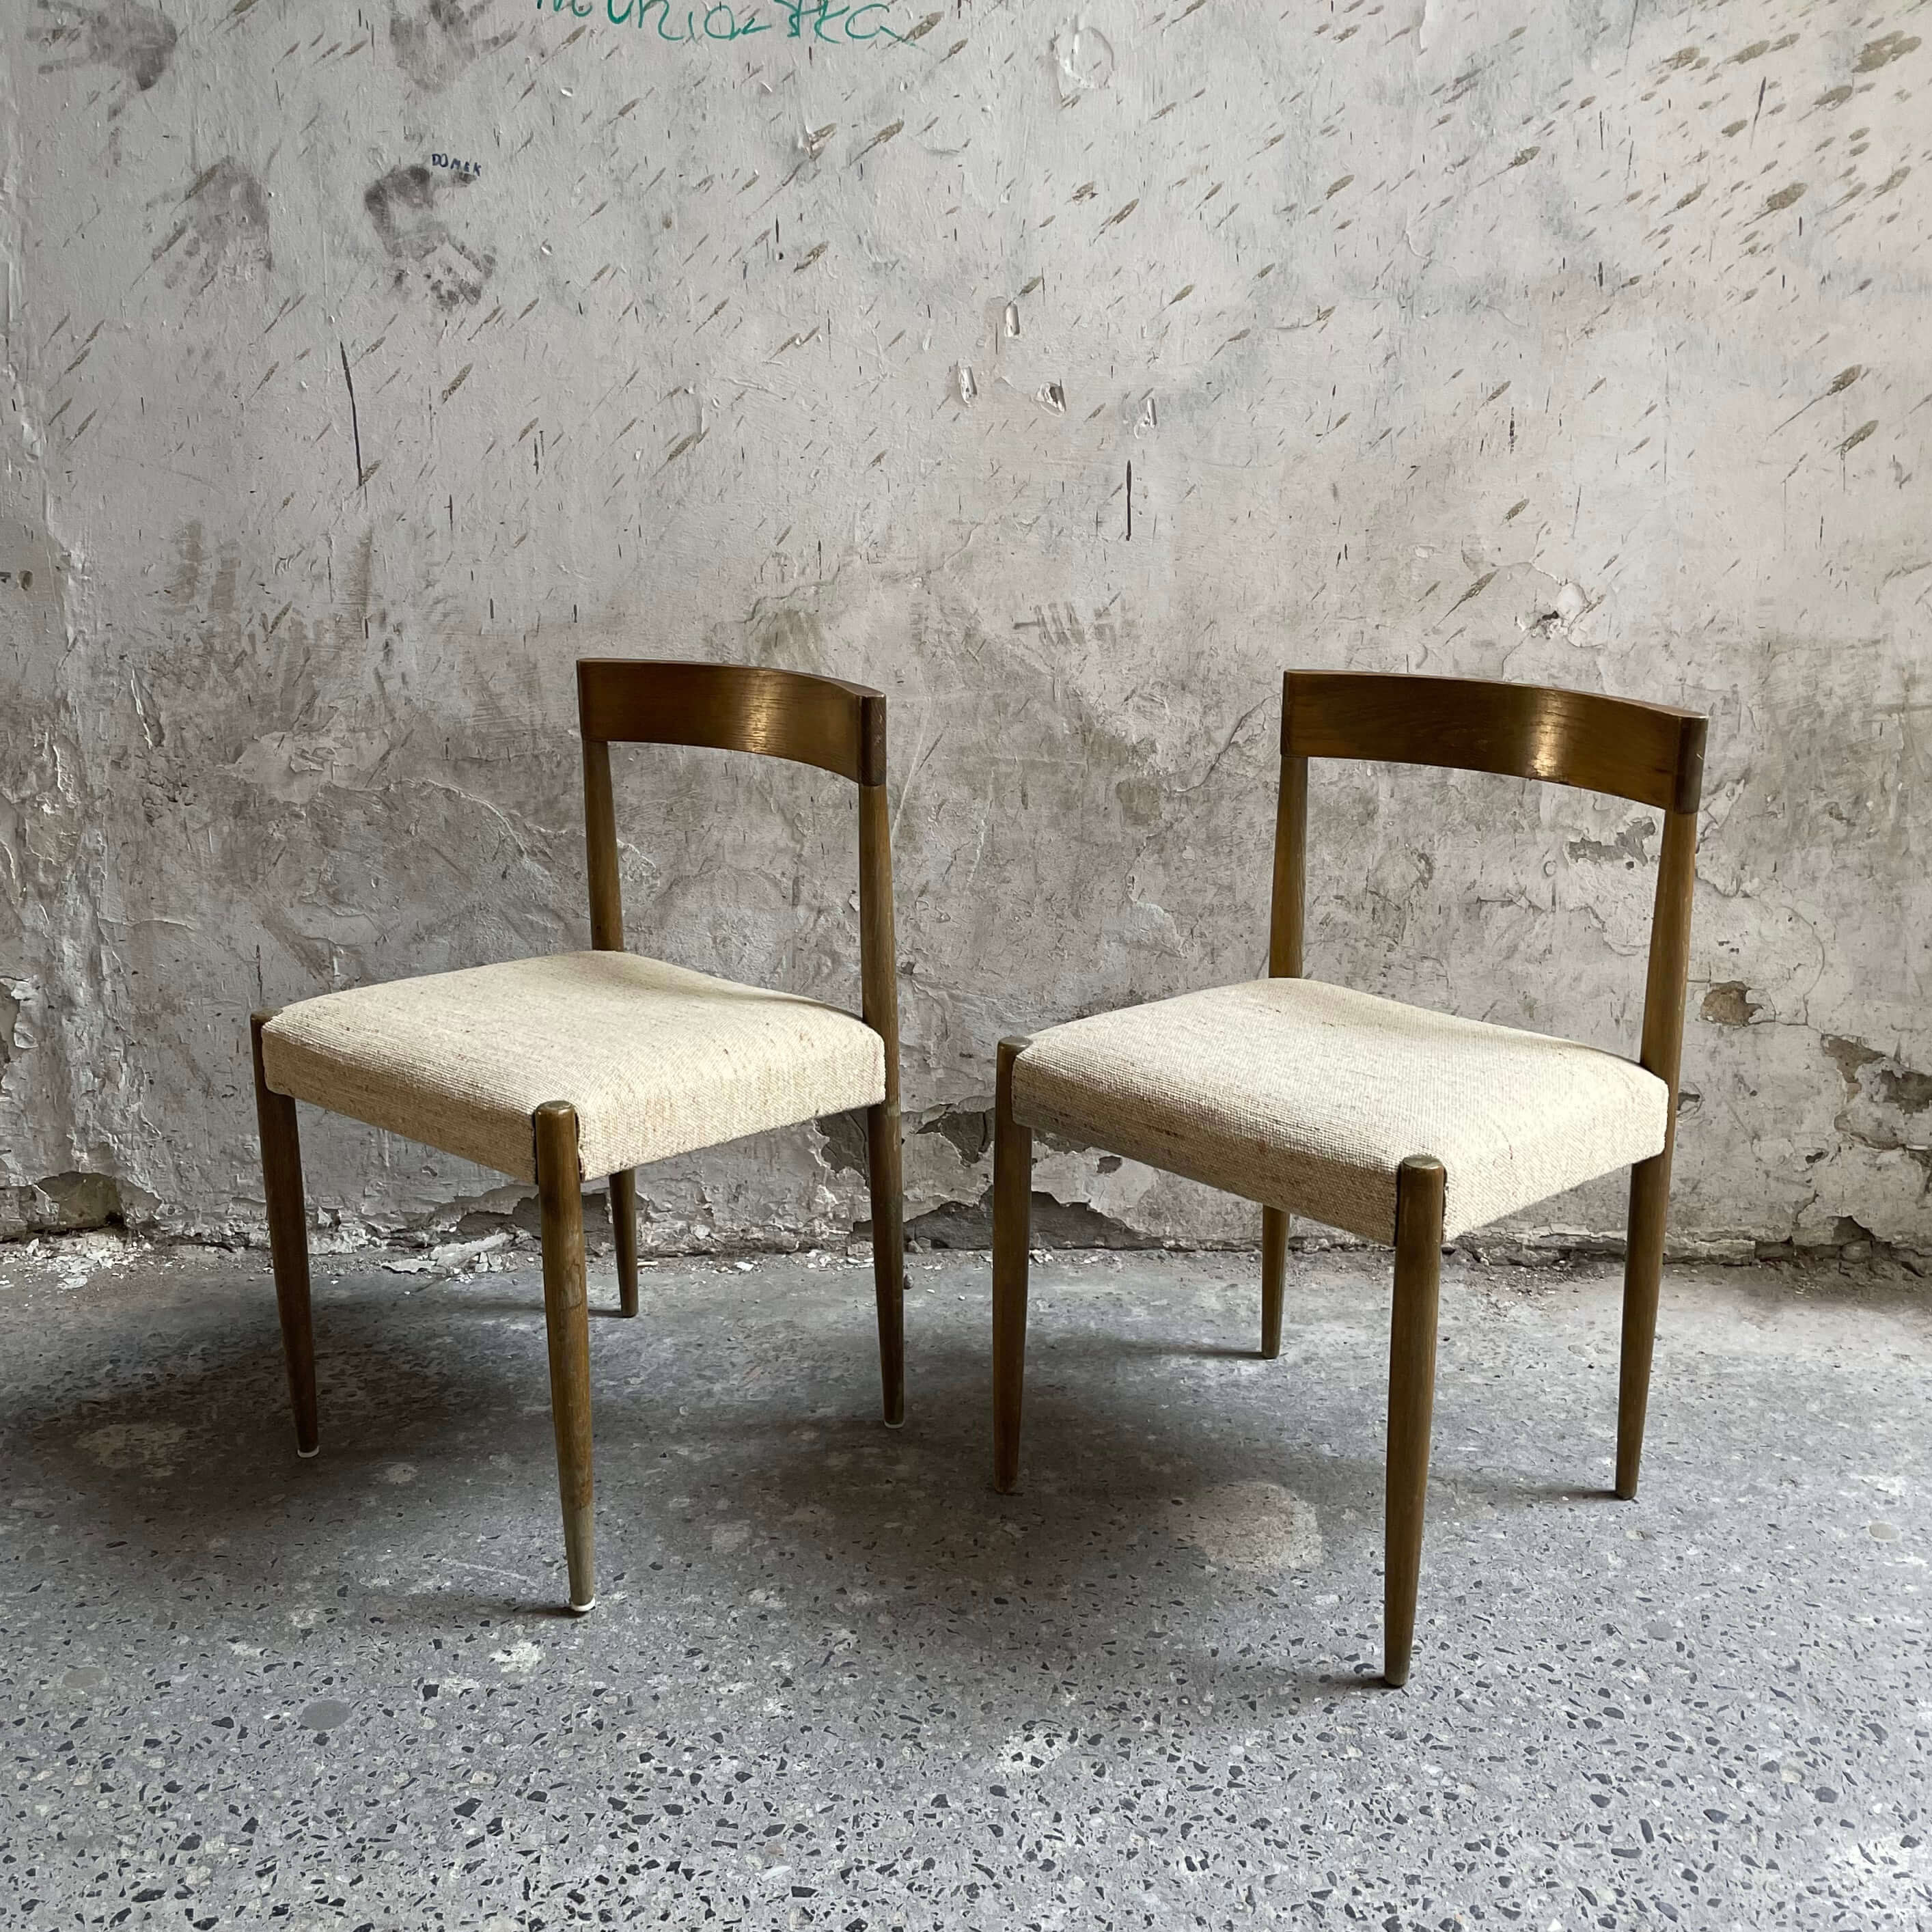 Lubke chairs wood textile vintage german design